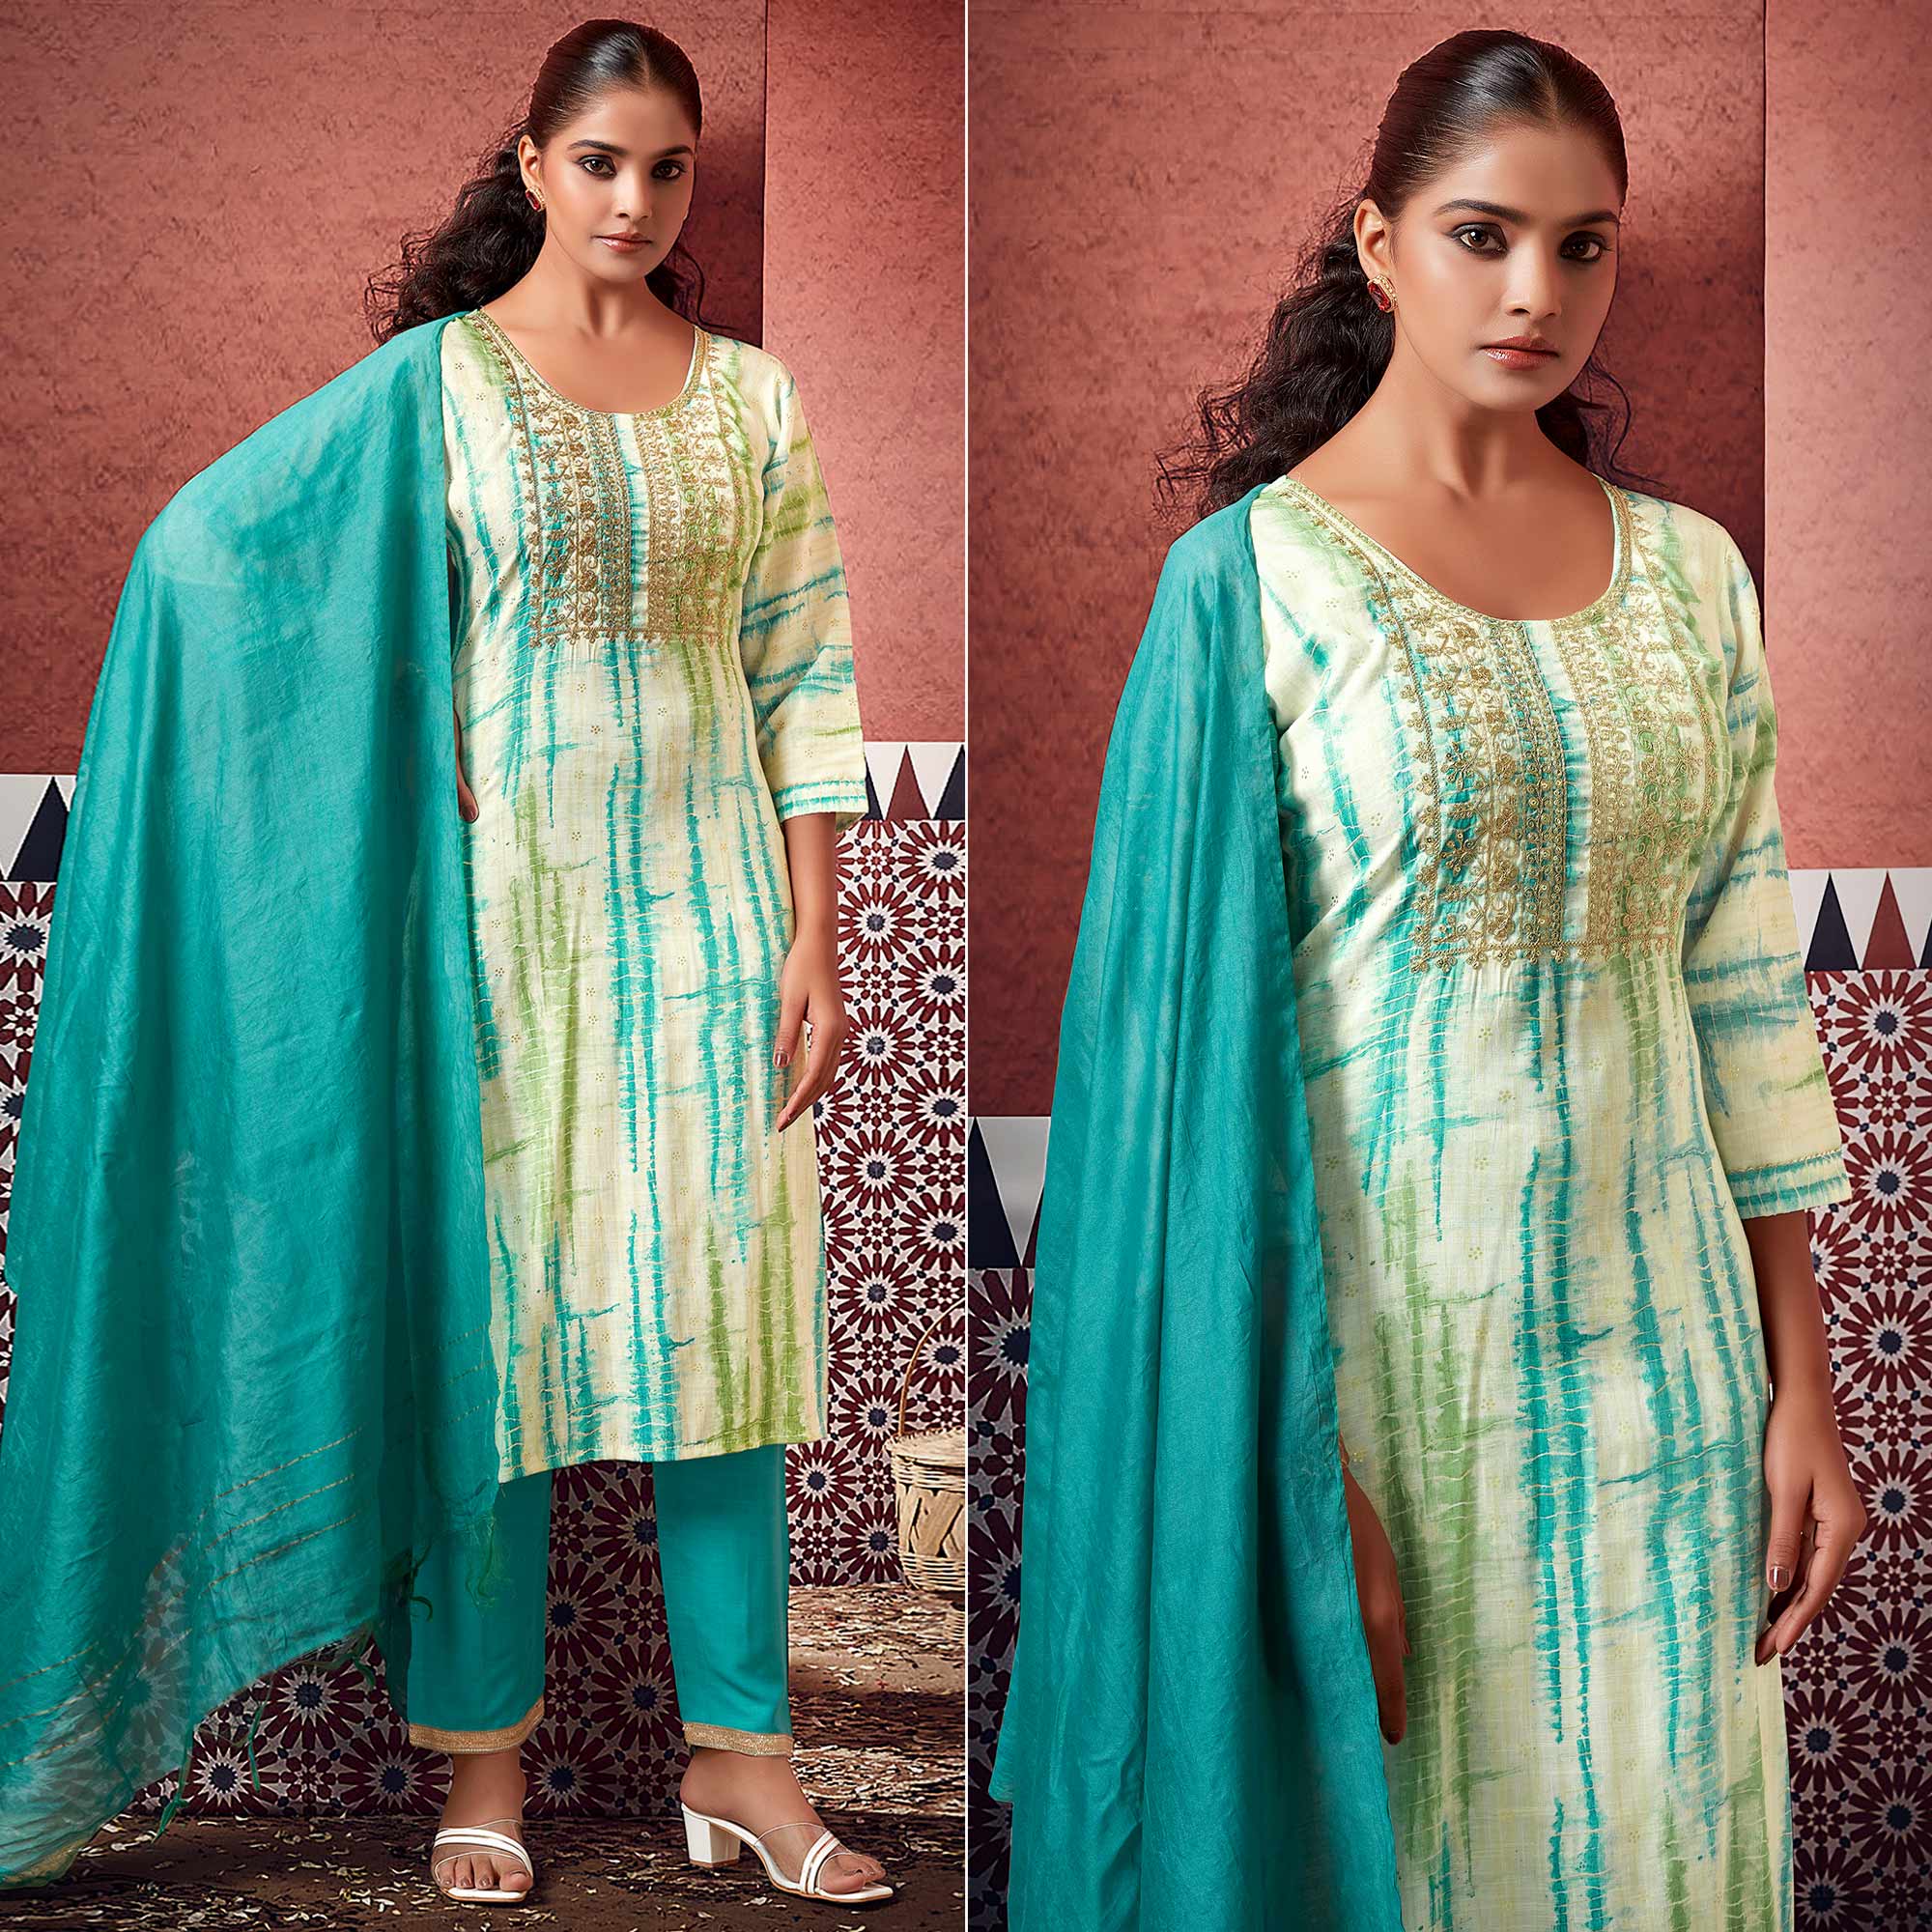 White mugal print cotton churidar dress design with cotton dupatta |  Kiran's Boutique